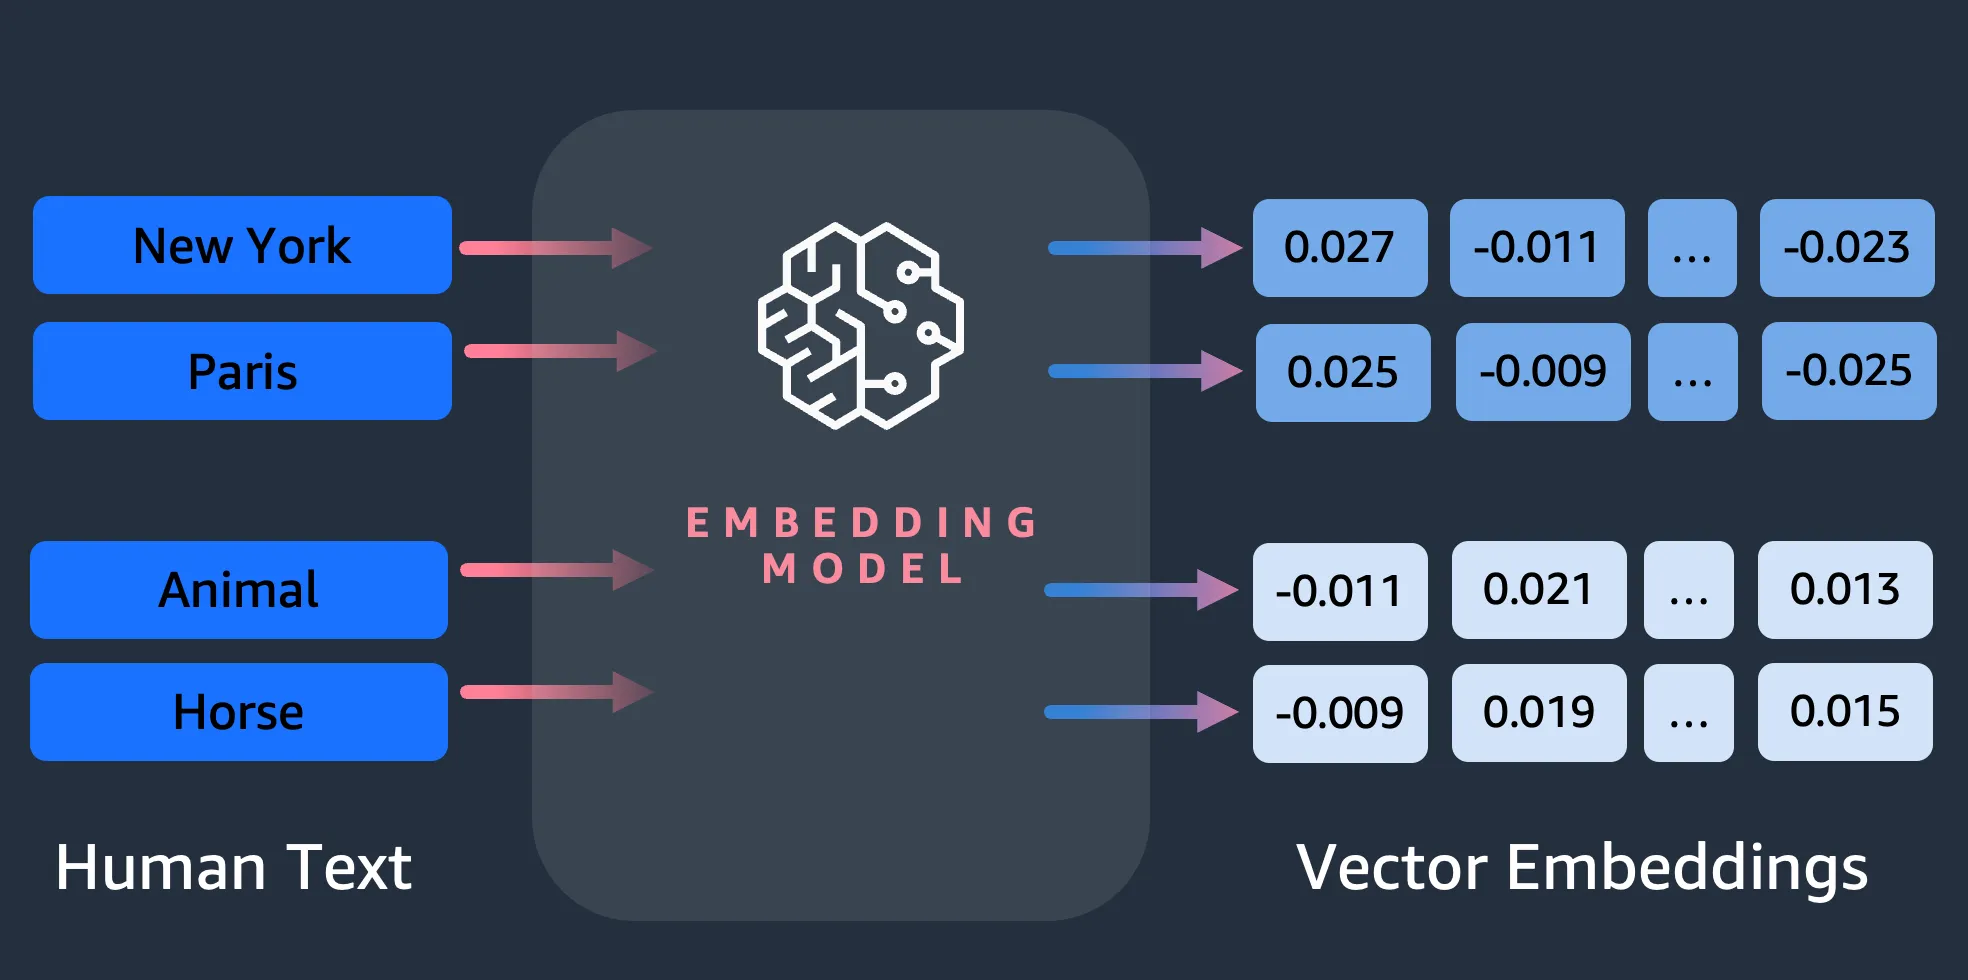 Vector embeddings